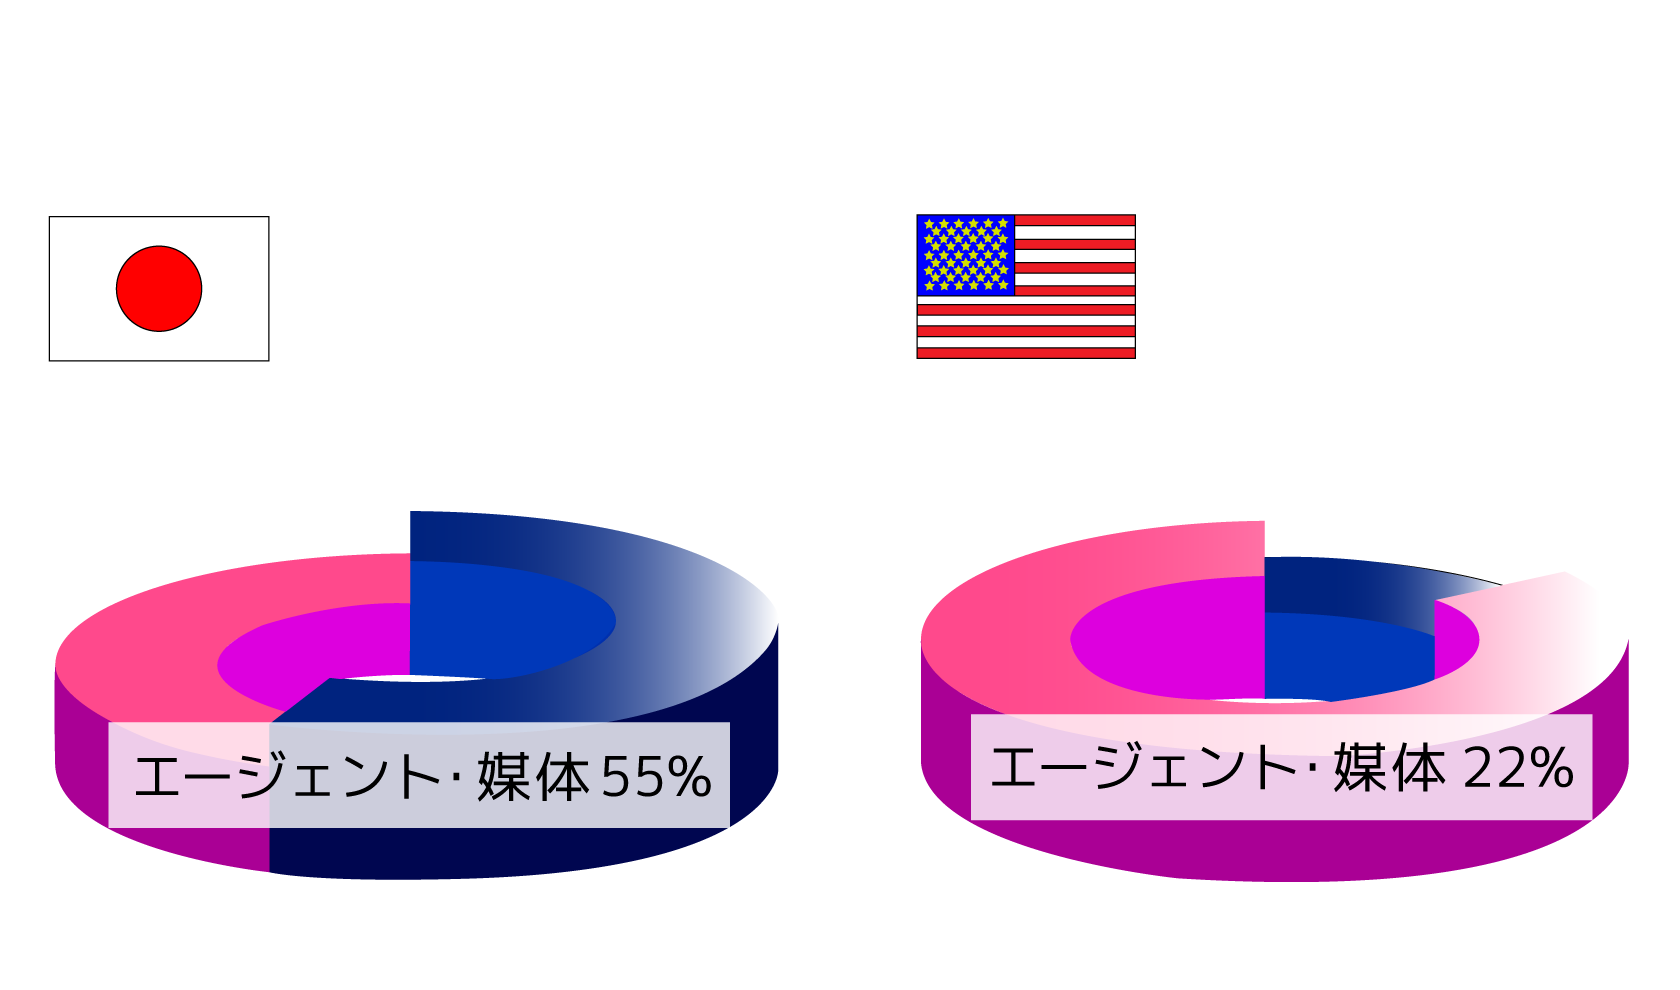 Japan Agents&Media 55%, US Agents&Media 23%